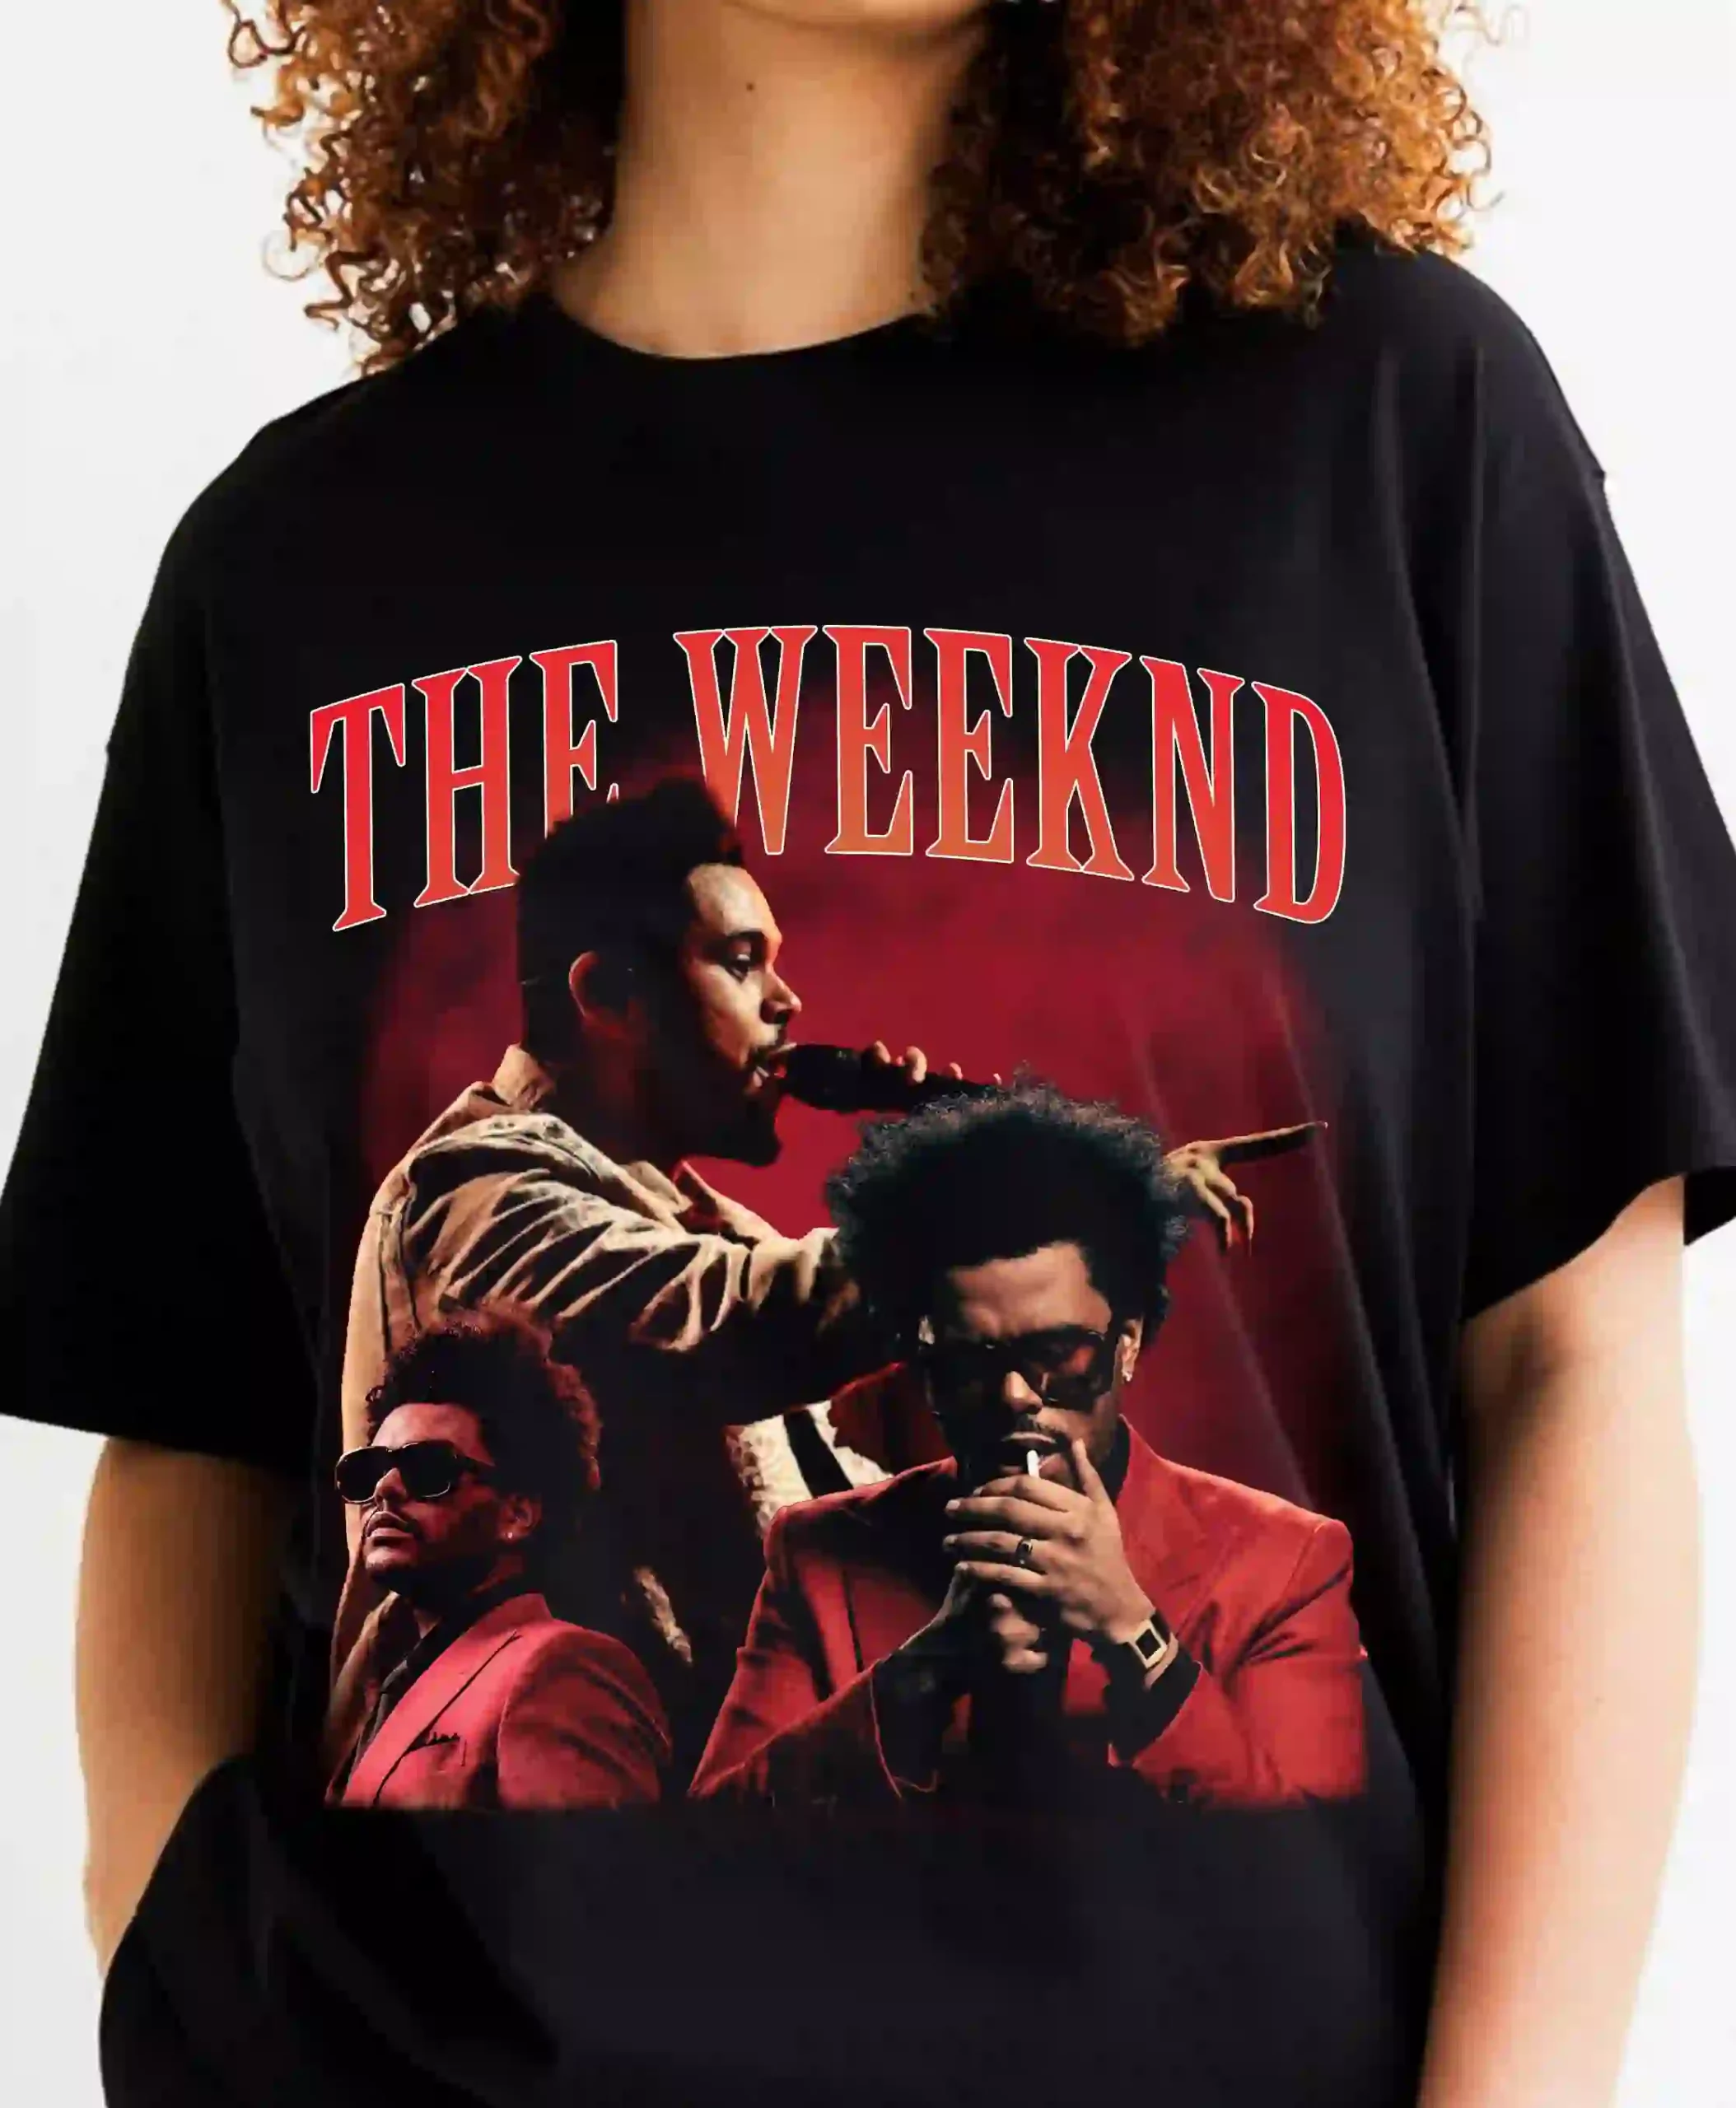 The Weeknd Trilogy Re-print Hoodie. The Weeknd Merch